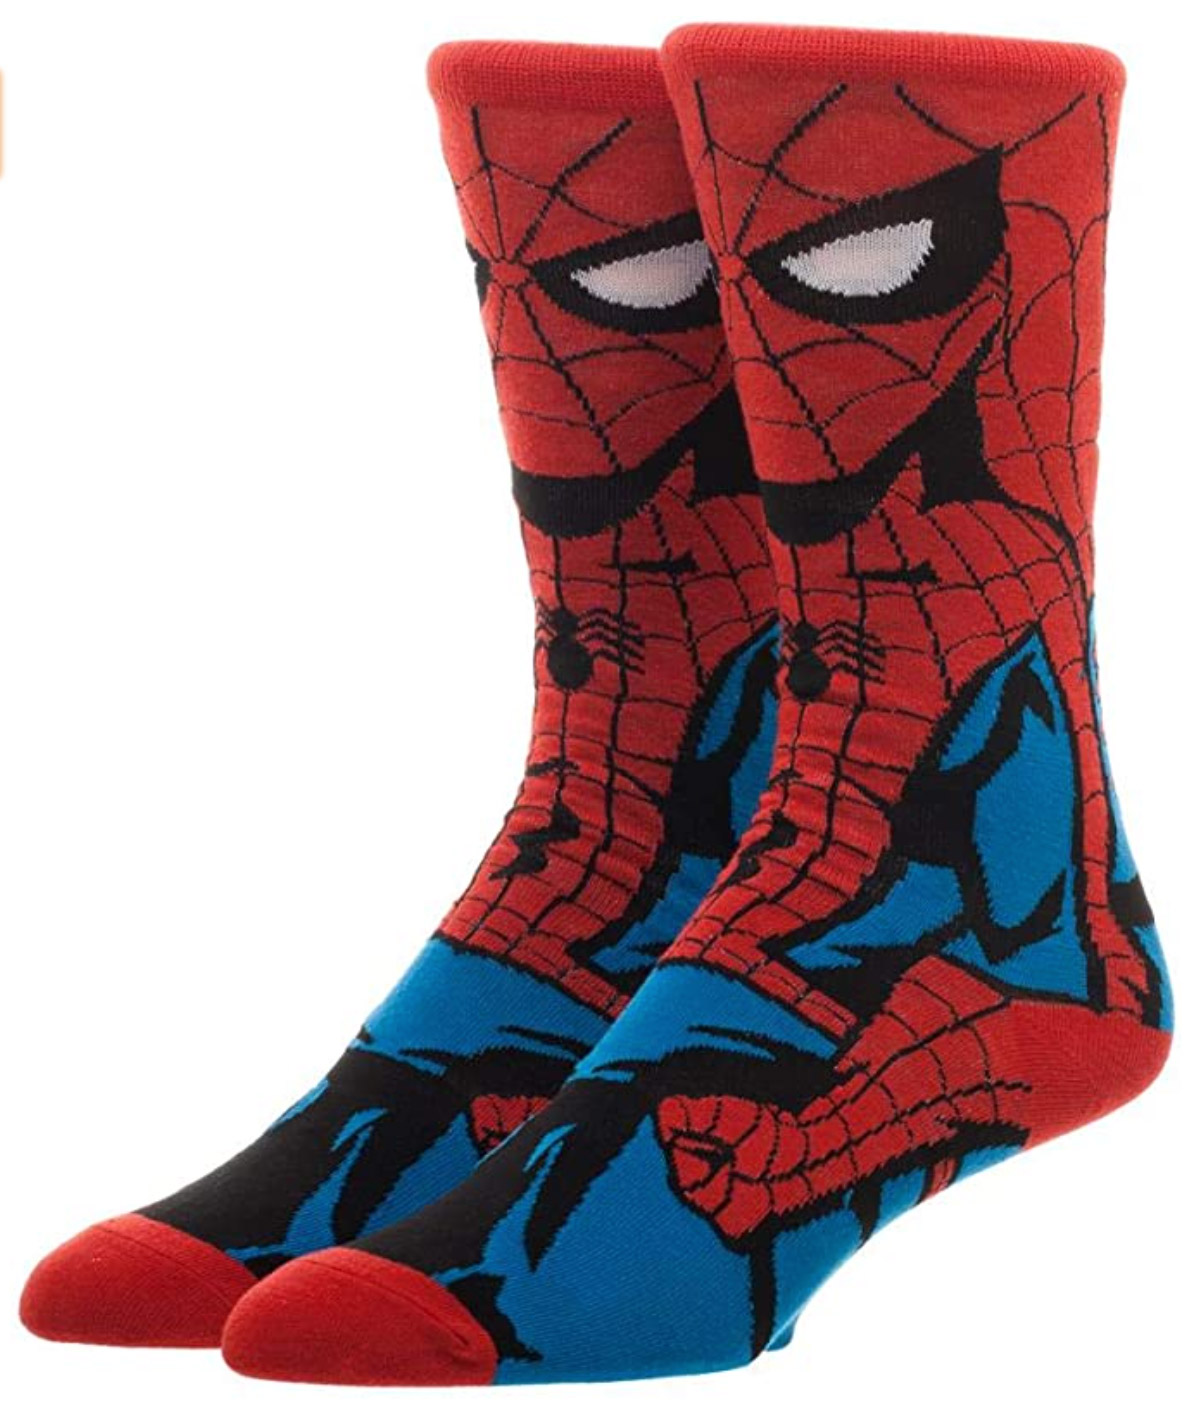 Spiderman Socks Gifts for Geeks